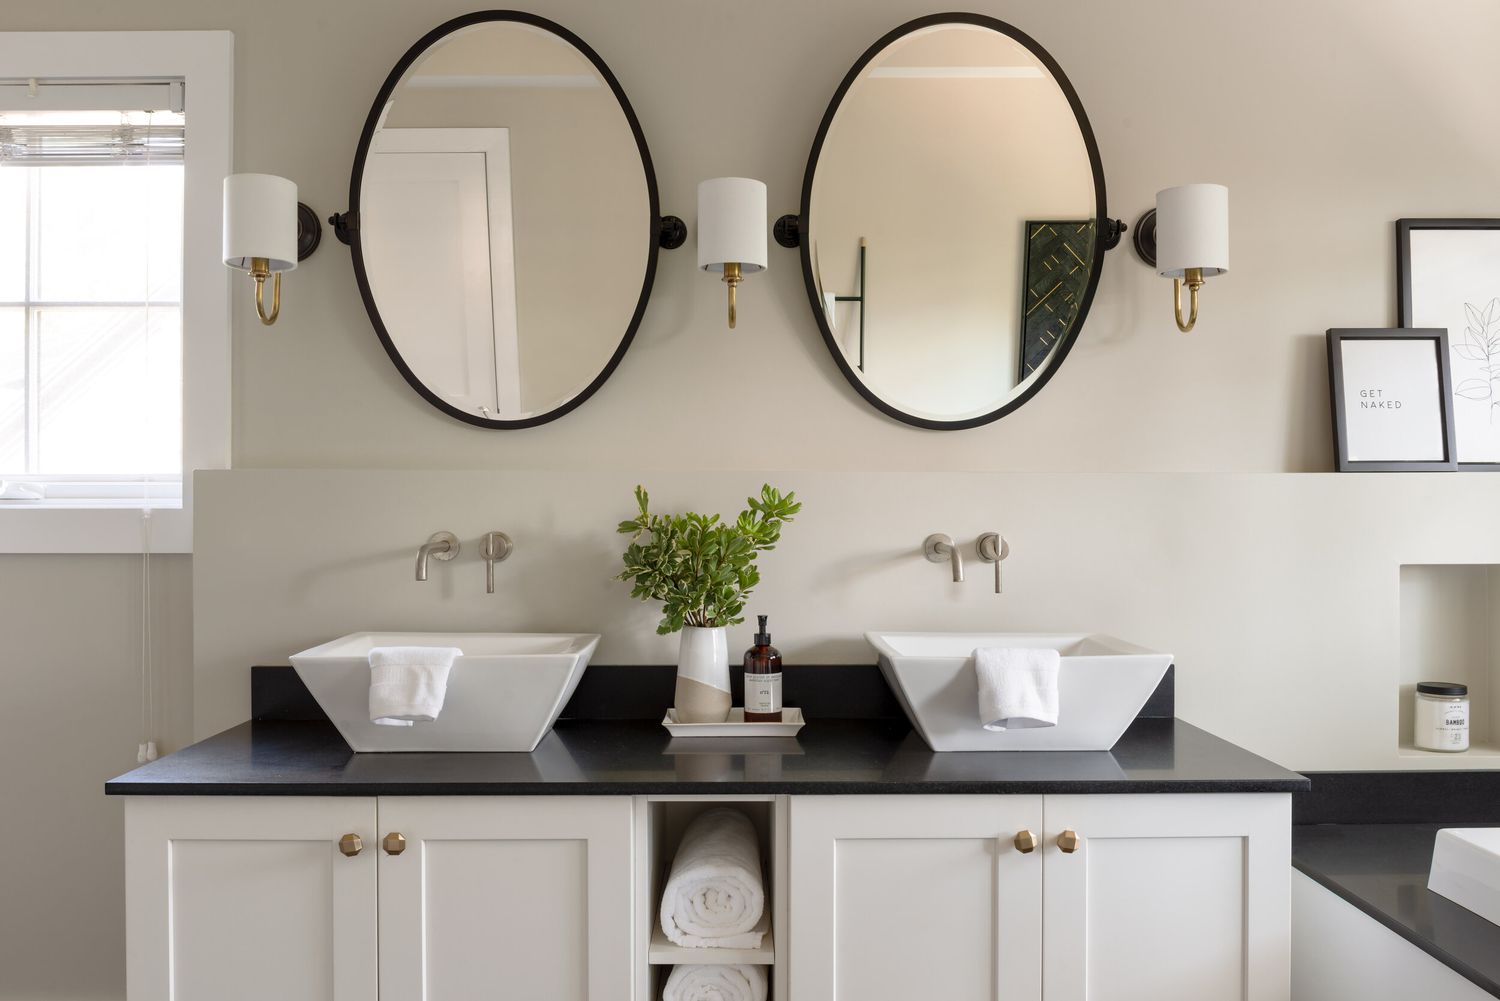 How to Decorate Bathroom Vanity